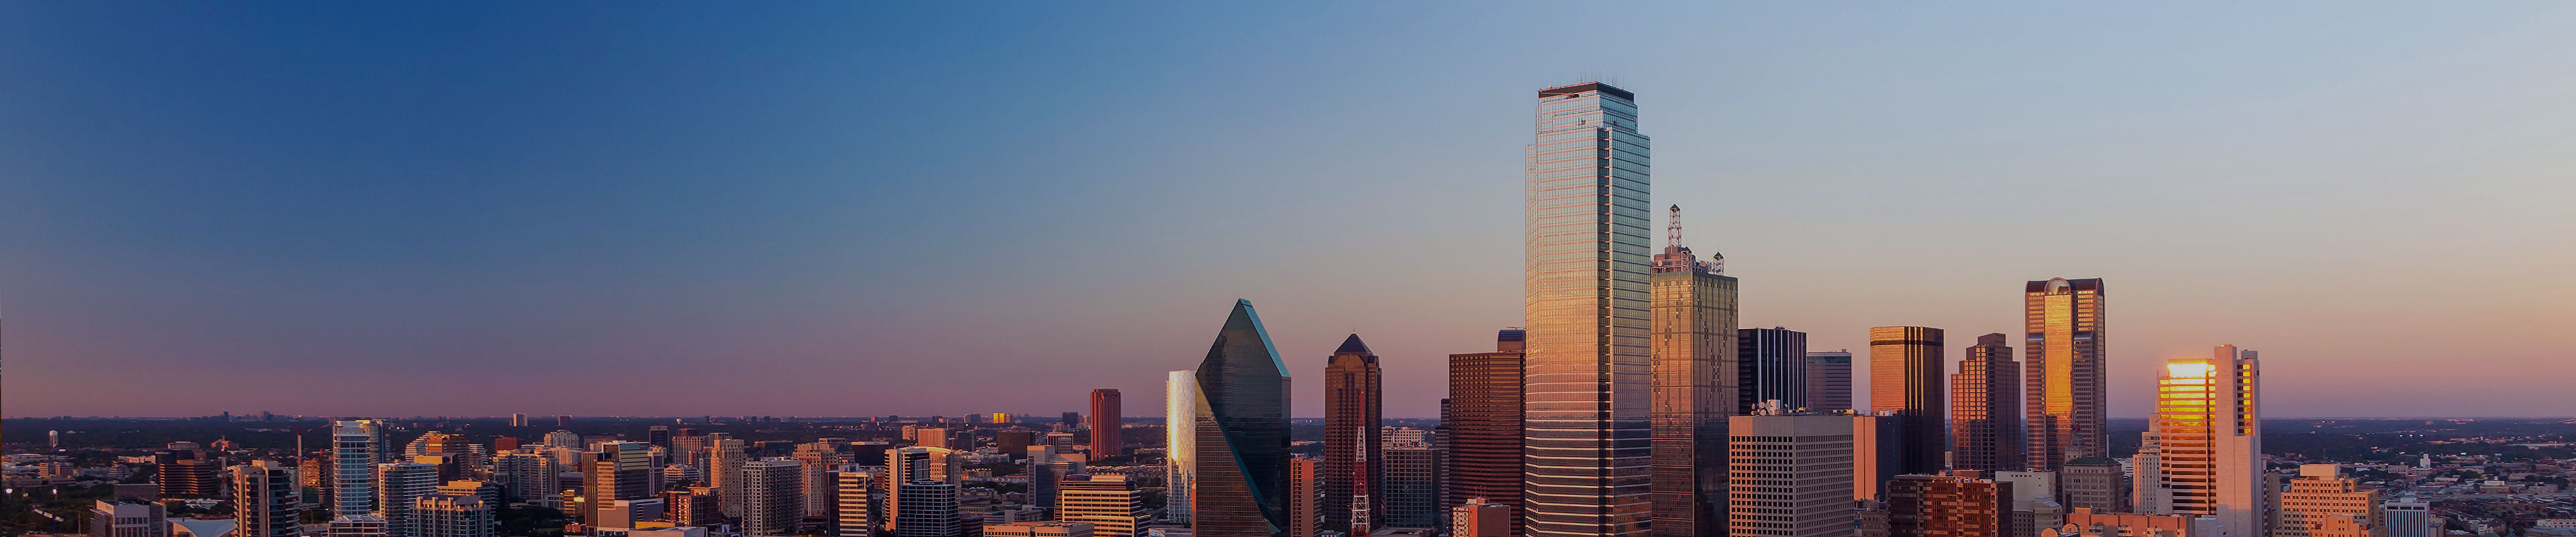 Best Digital Marketing Agencies in Dallas